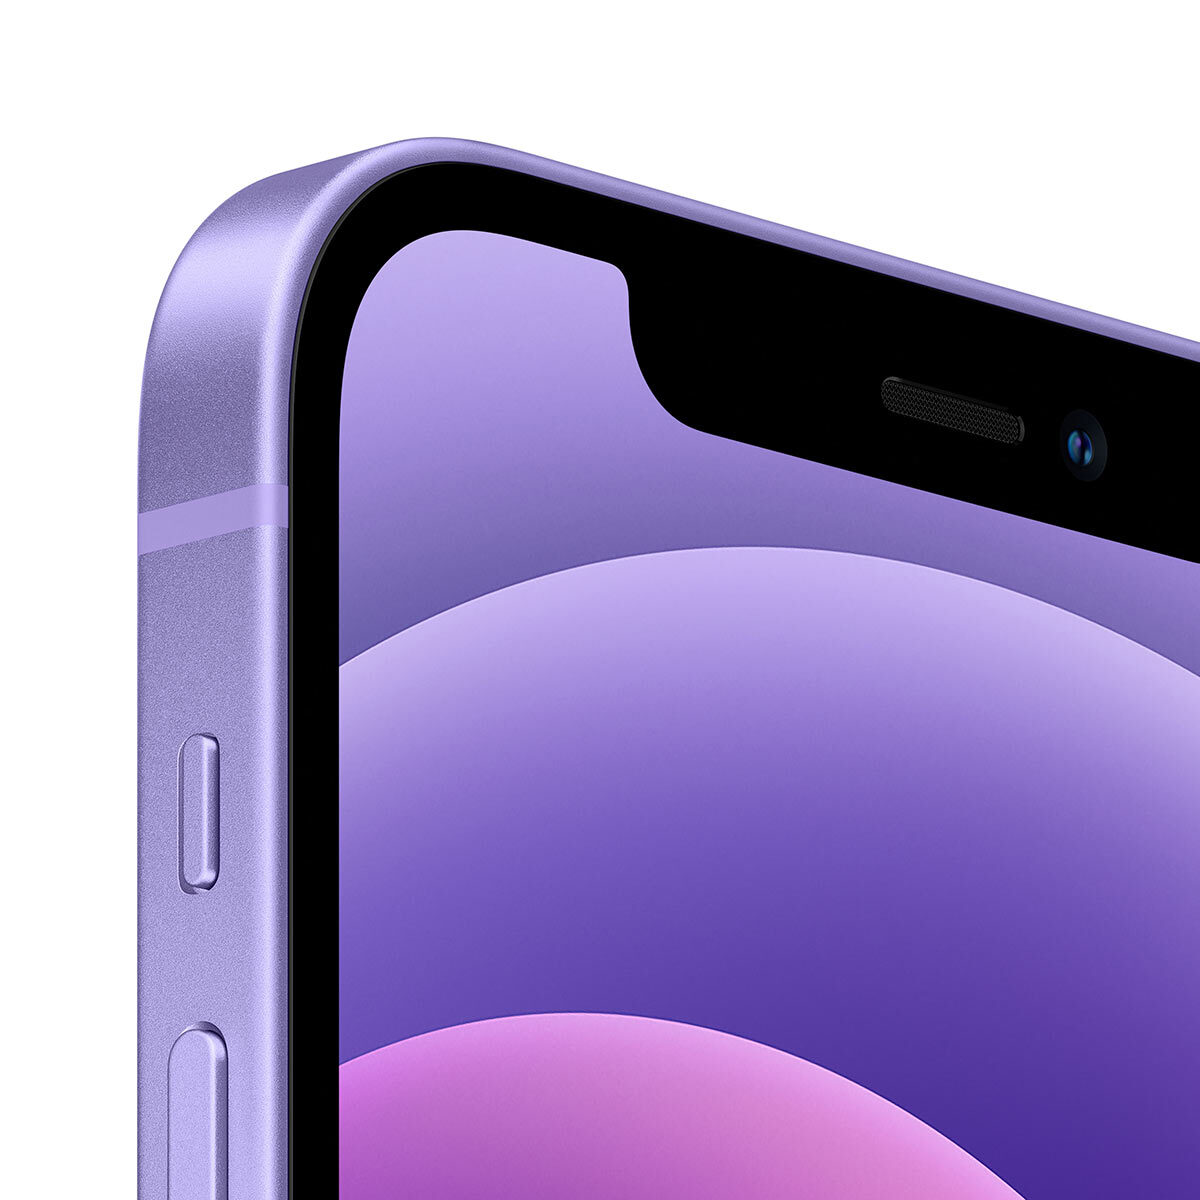 Buy Apple iPhone 12 128GB Sim Free Mobile Phone in Purple, MJNP3B/A at costco.co.uk